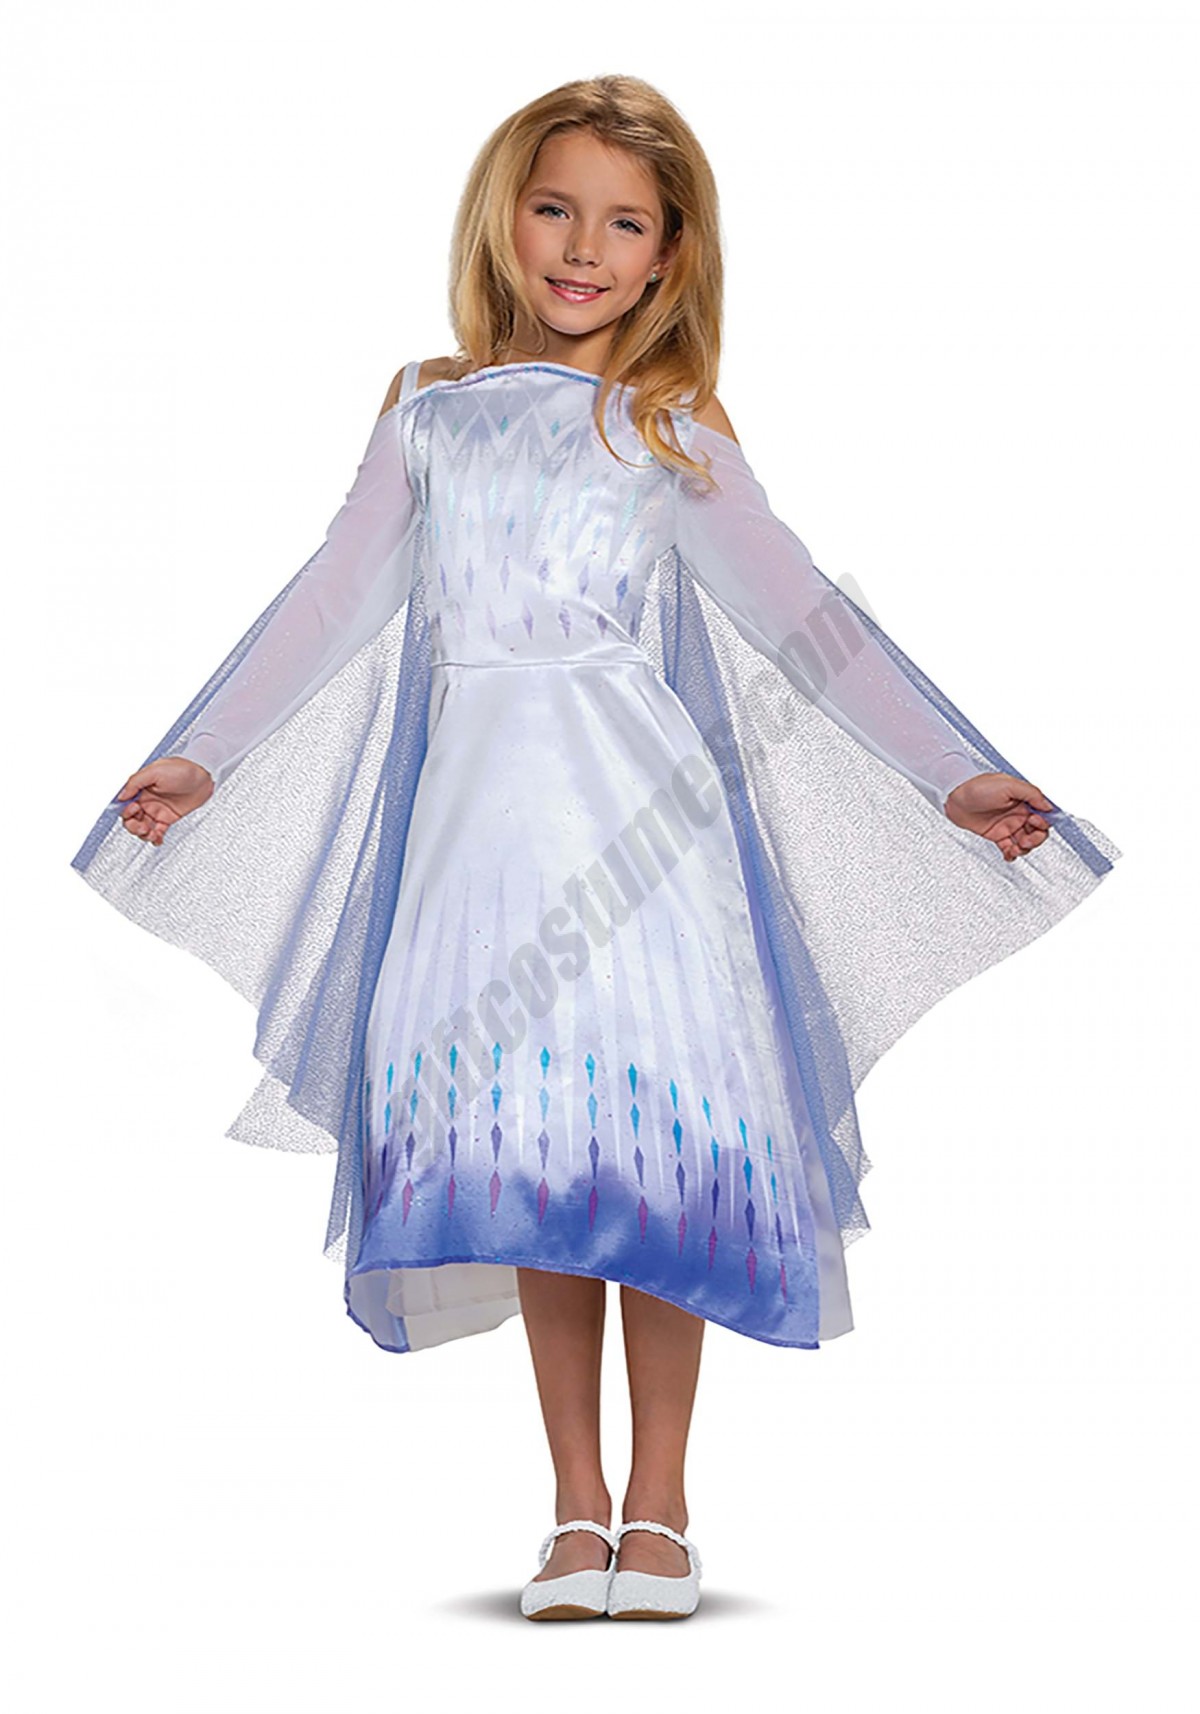 Frozen Snow Queen Elsa Classic Costume for Kids Promotions - -0